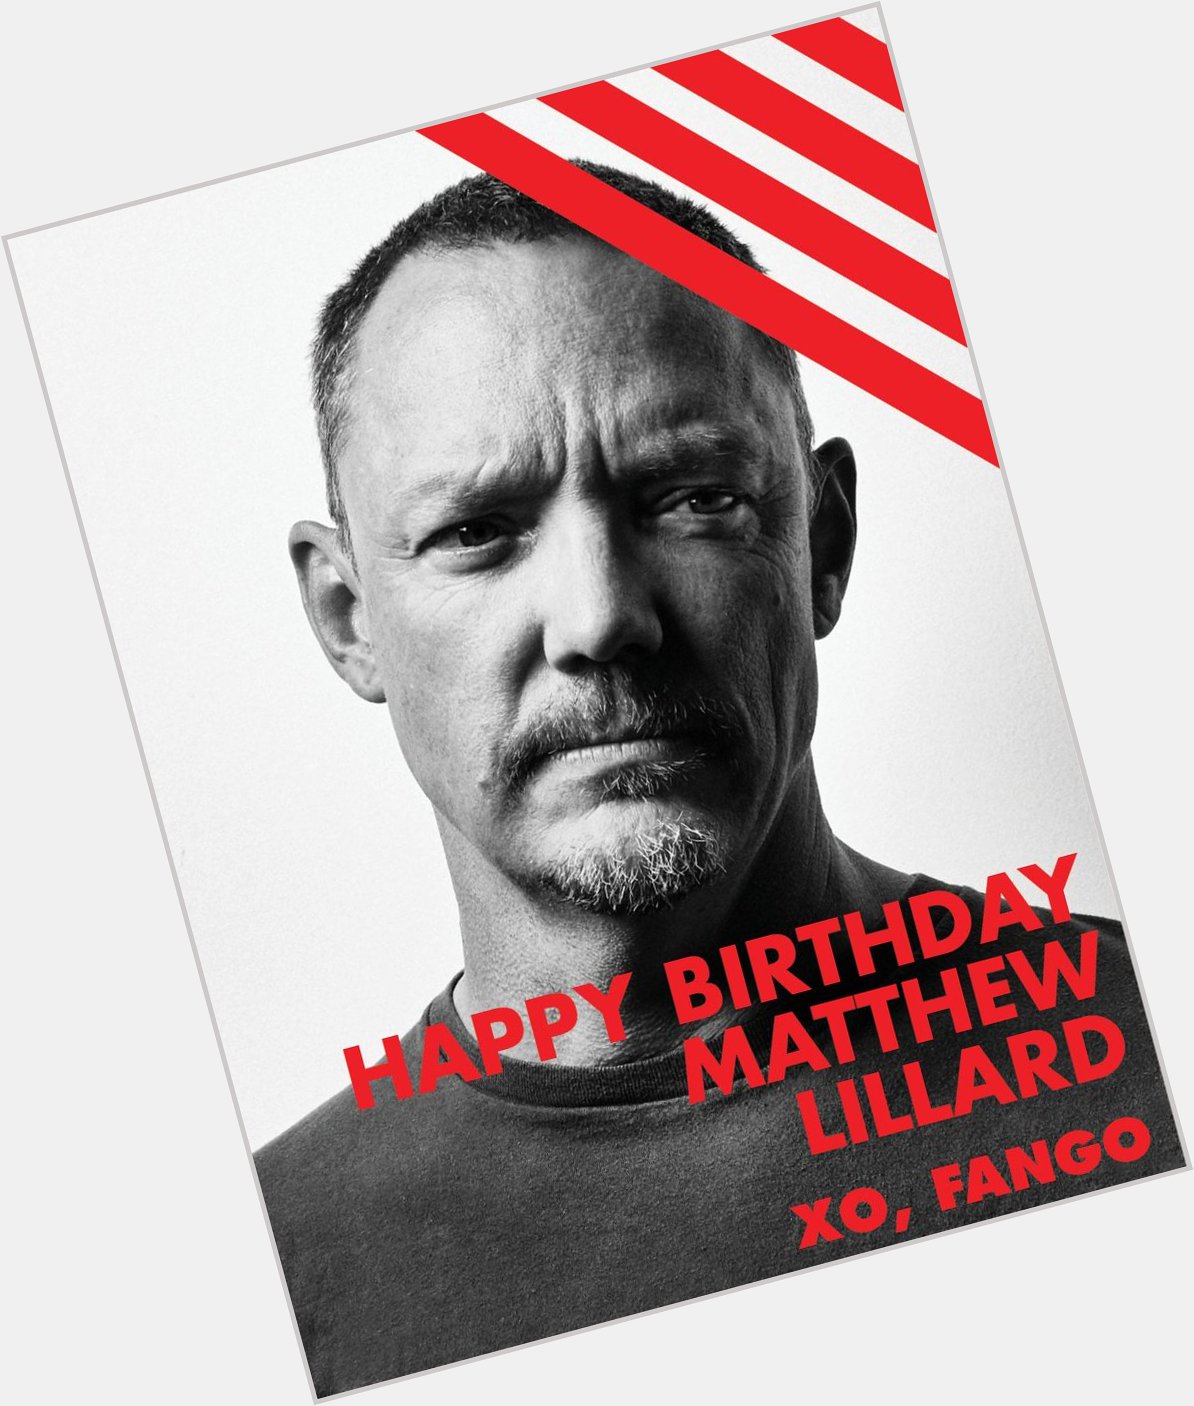 Happy Birthday Matthew Lillard! XO, Fango 